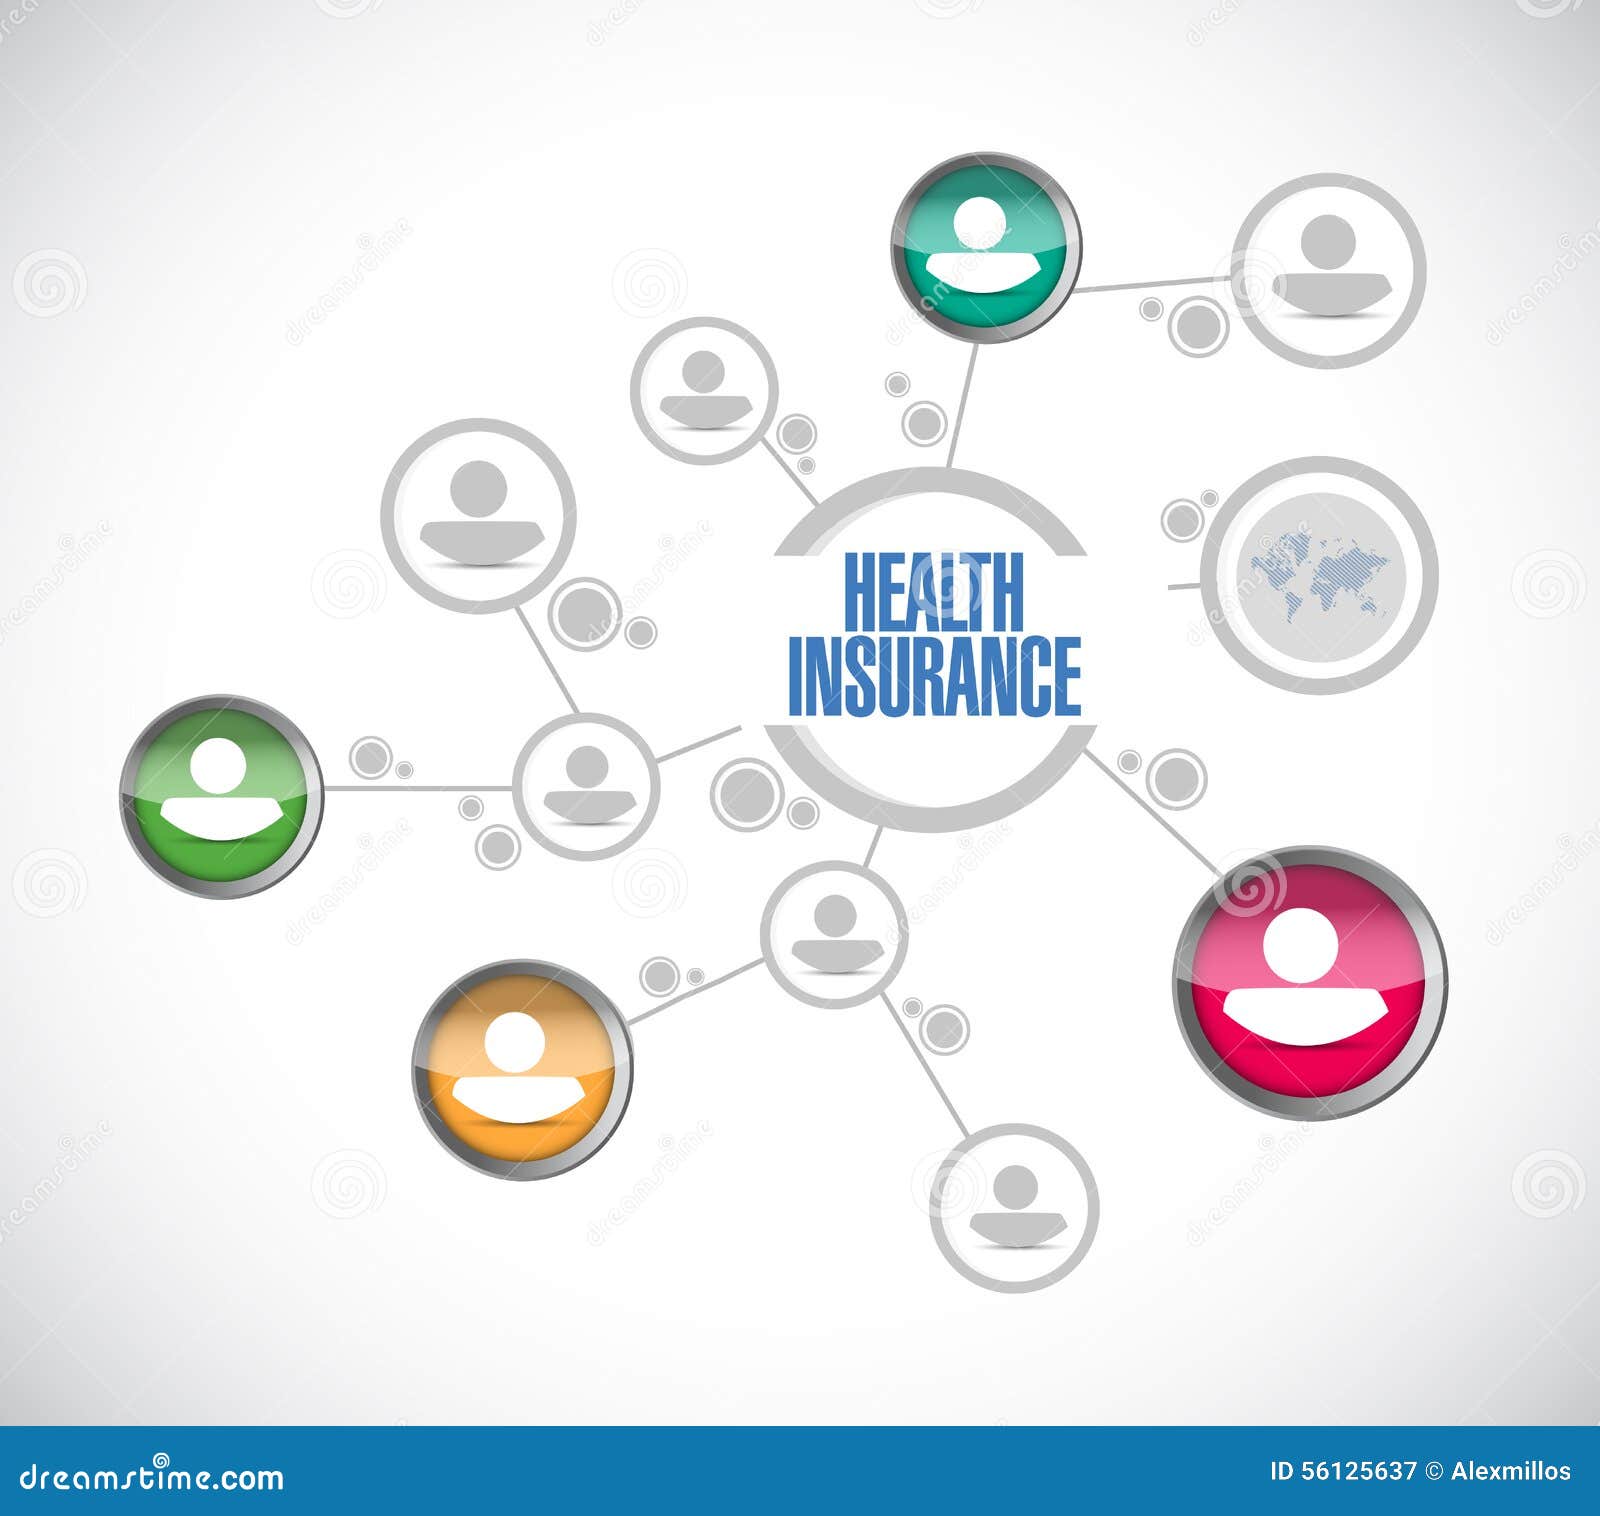 Health Insurance People Diagram Network Stock Illustration Image:
56125637